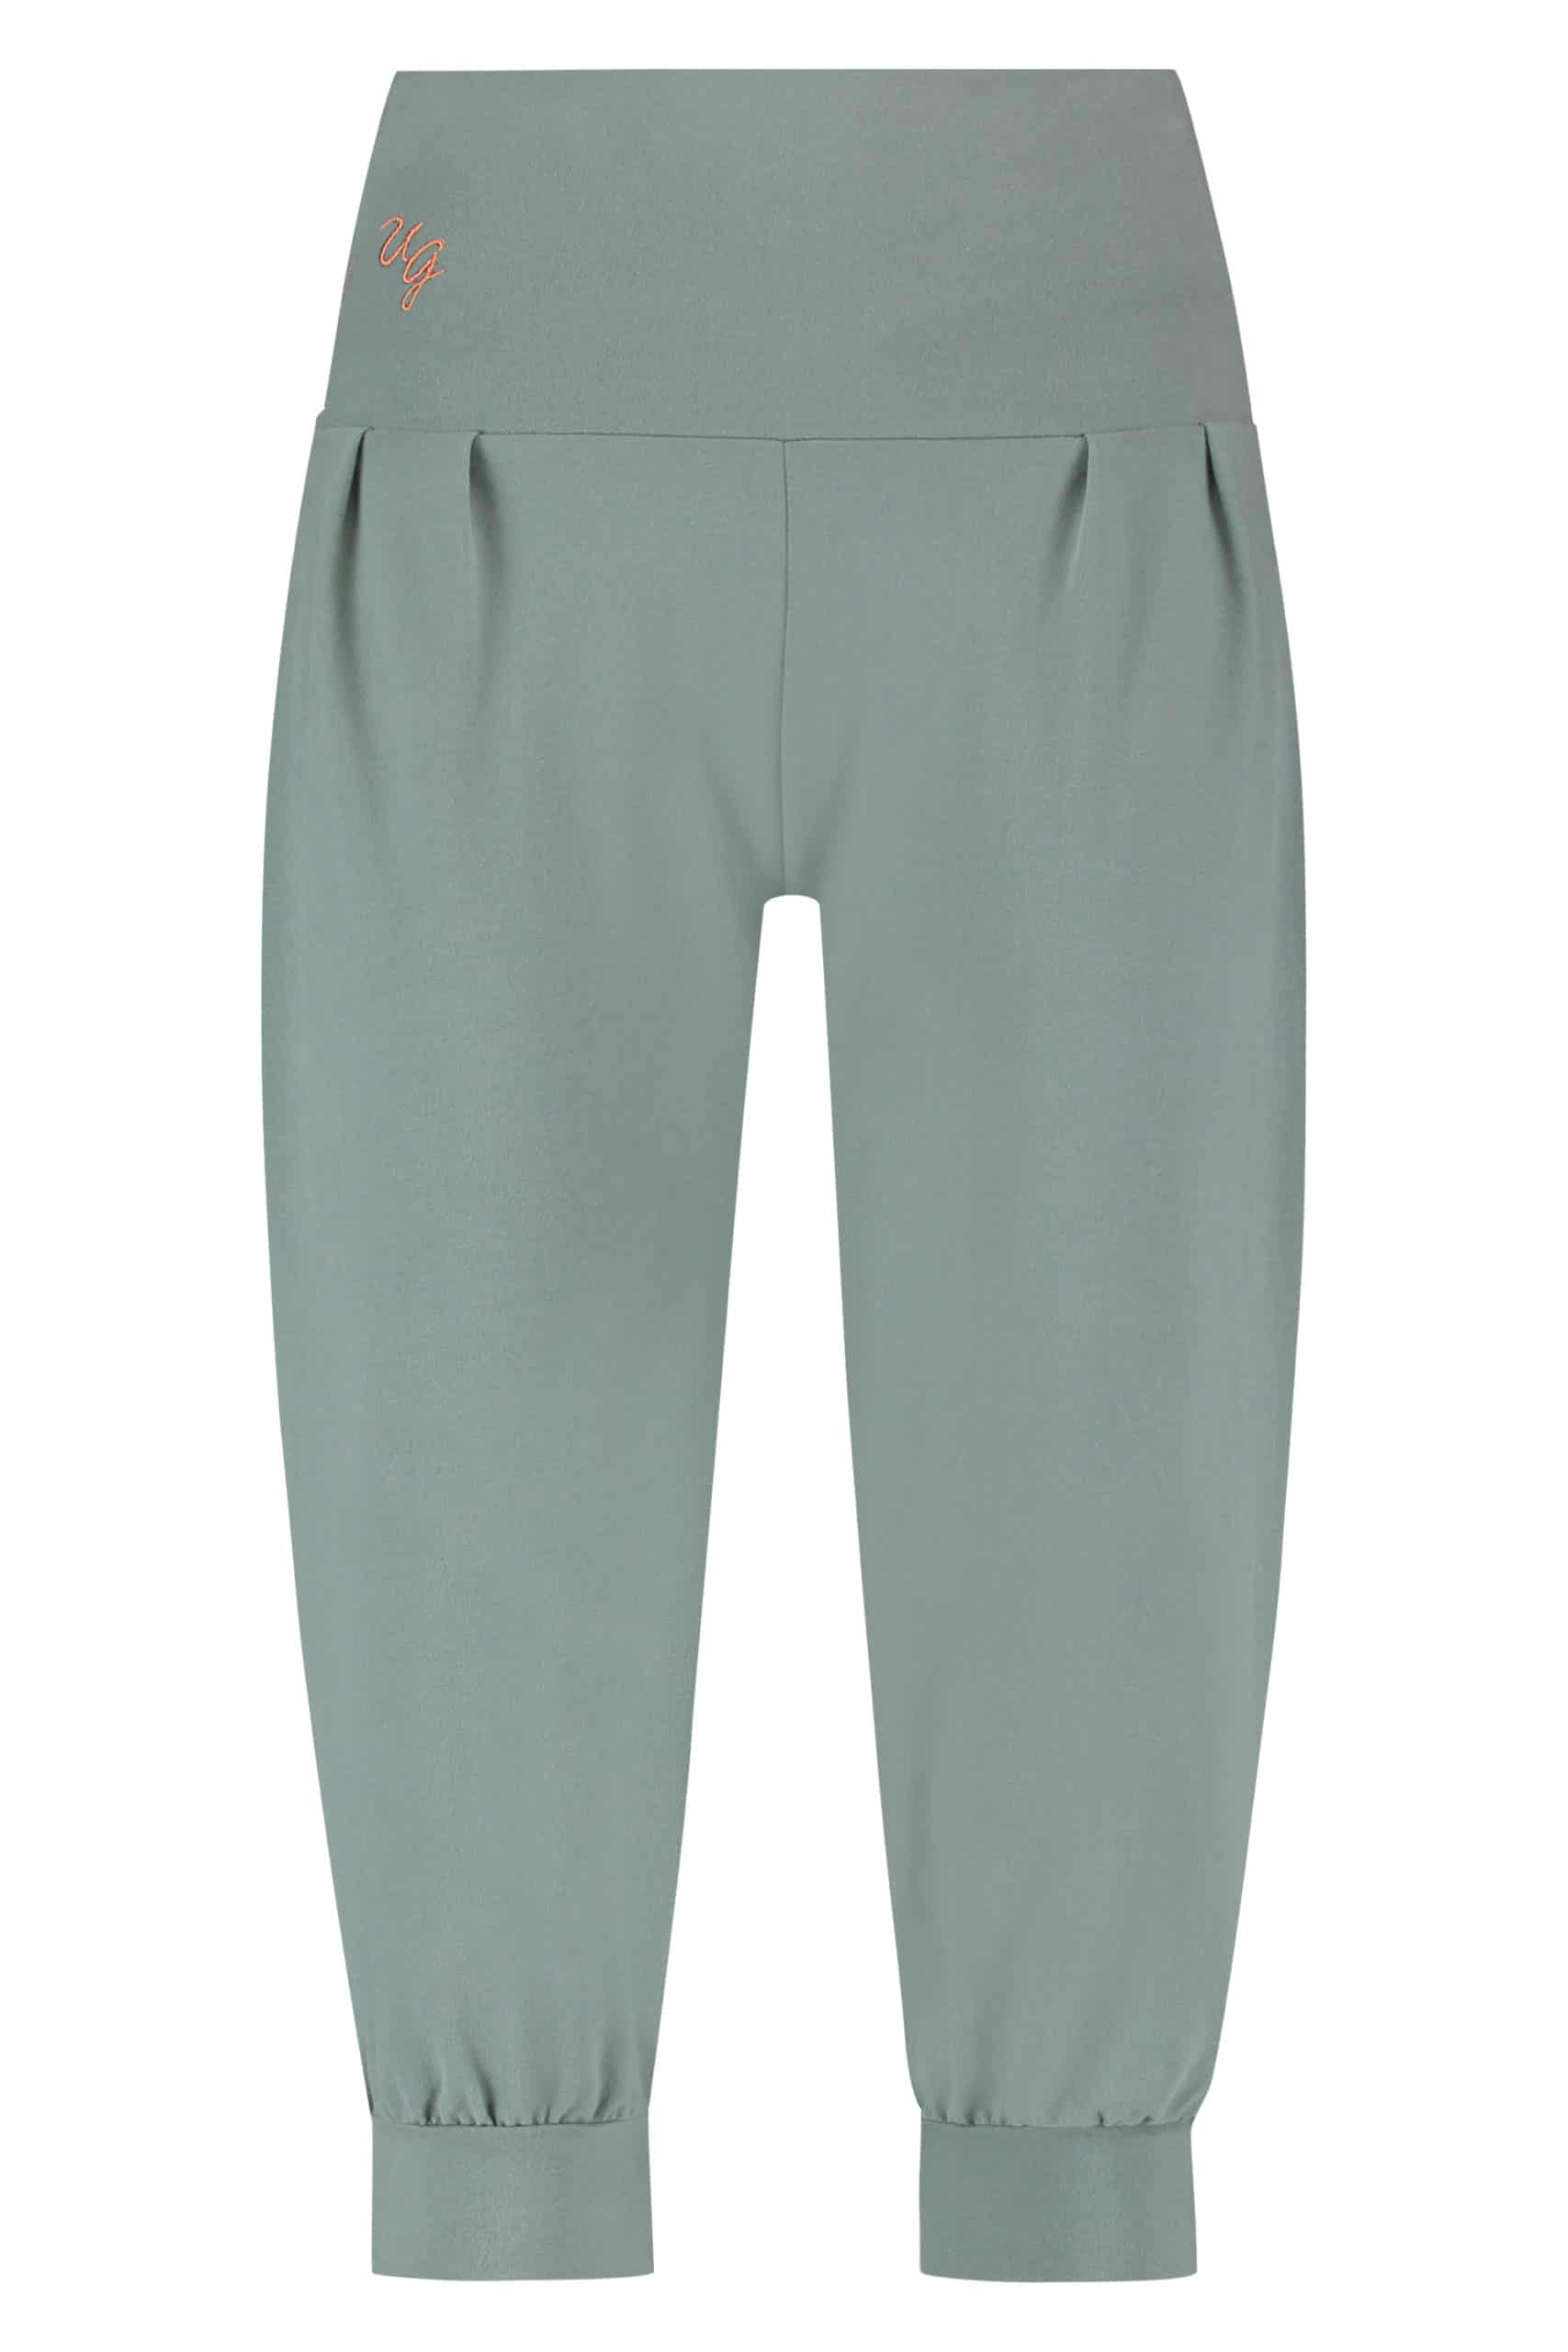 Comfortable loose-fit yoga pants Sukha Capri with three-quarter legs in soft jade color